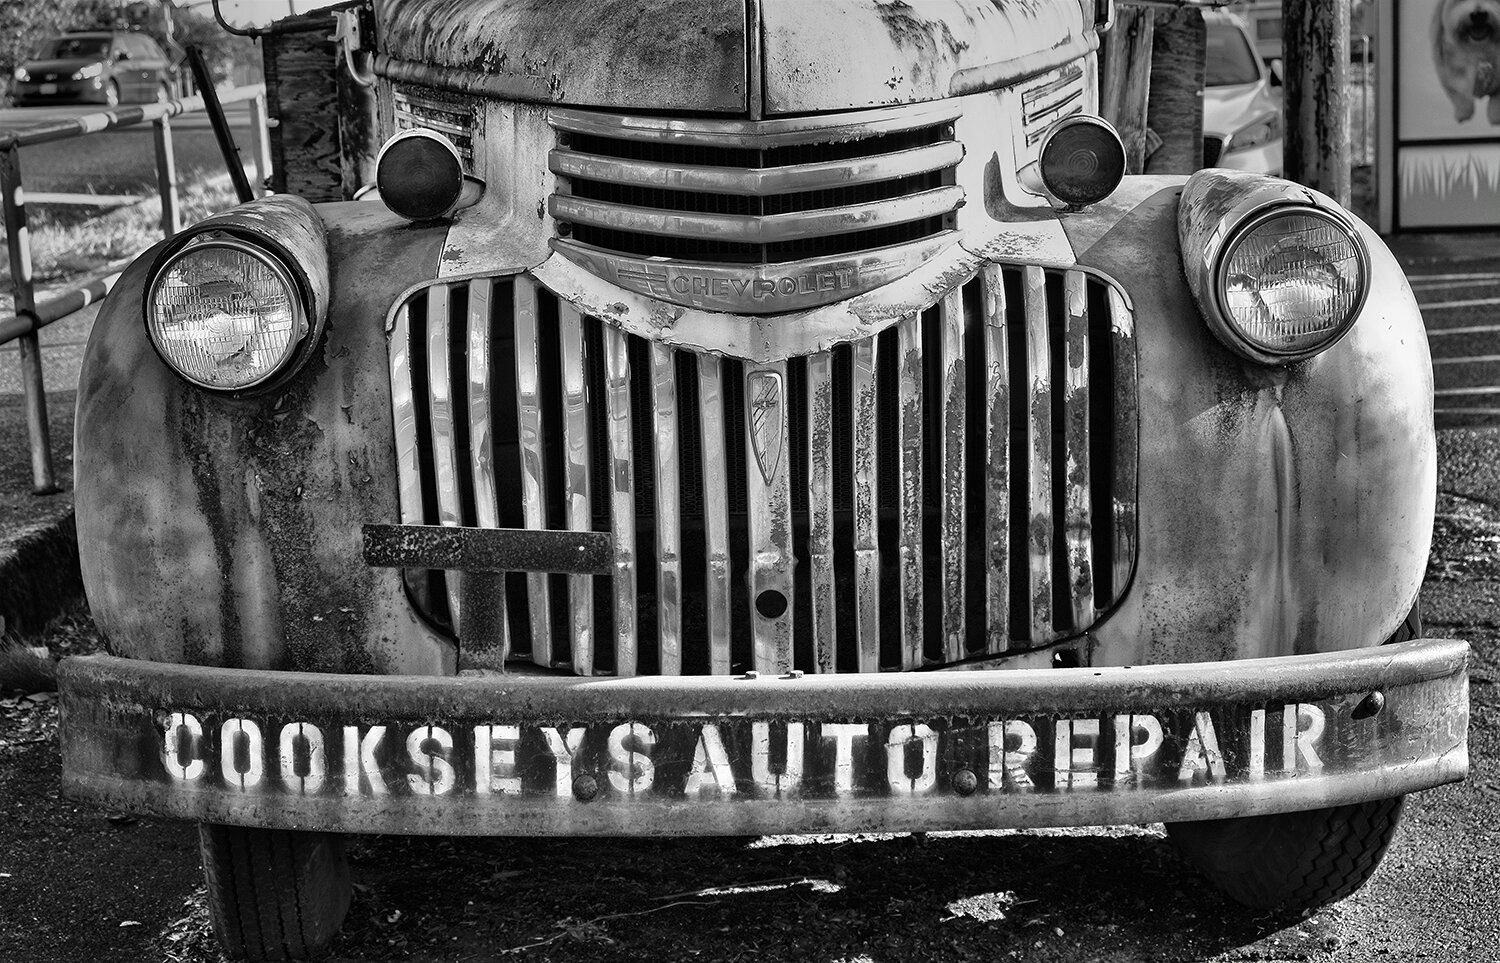 Cookseys Auto Repair.jpg